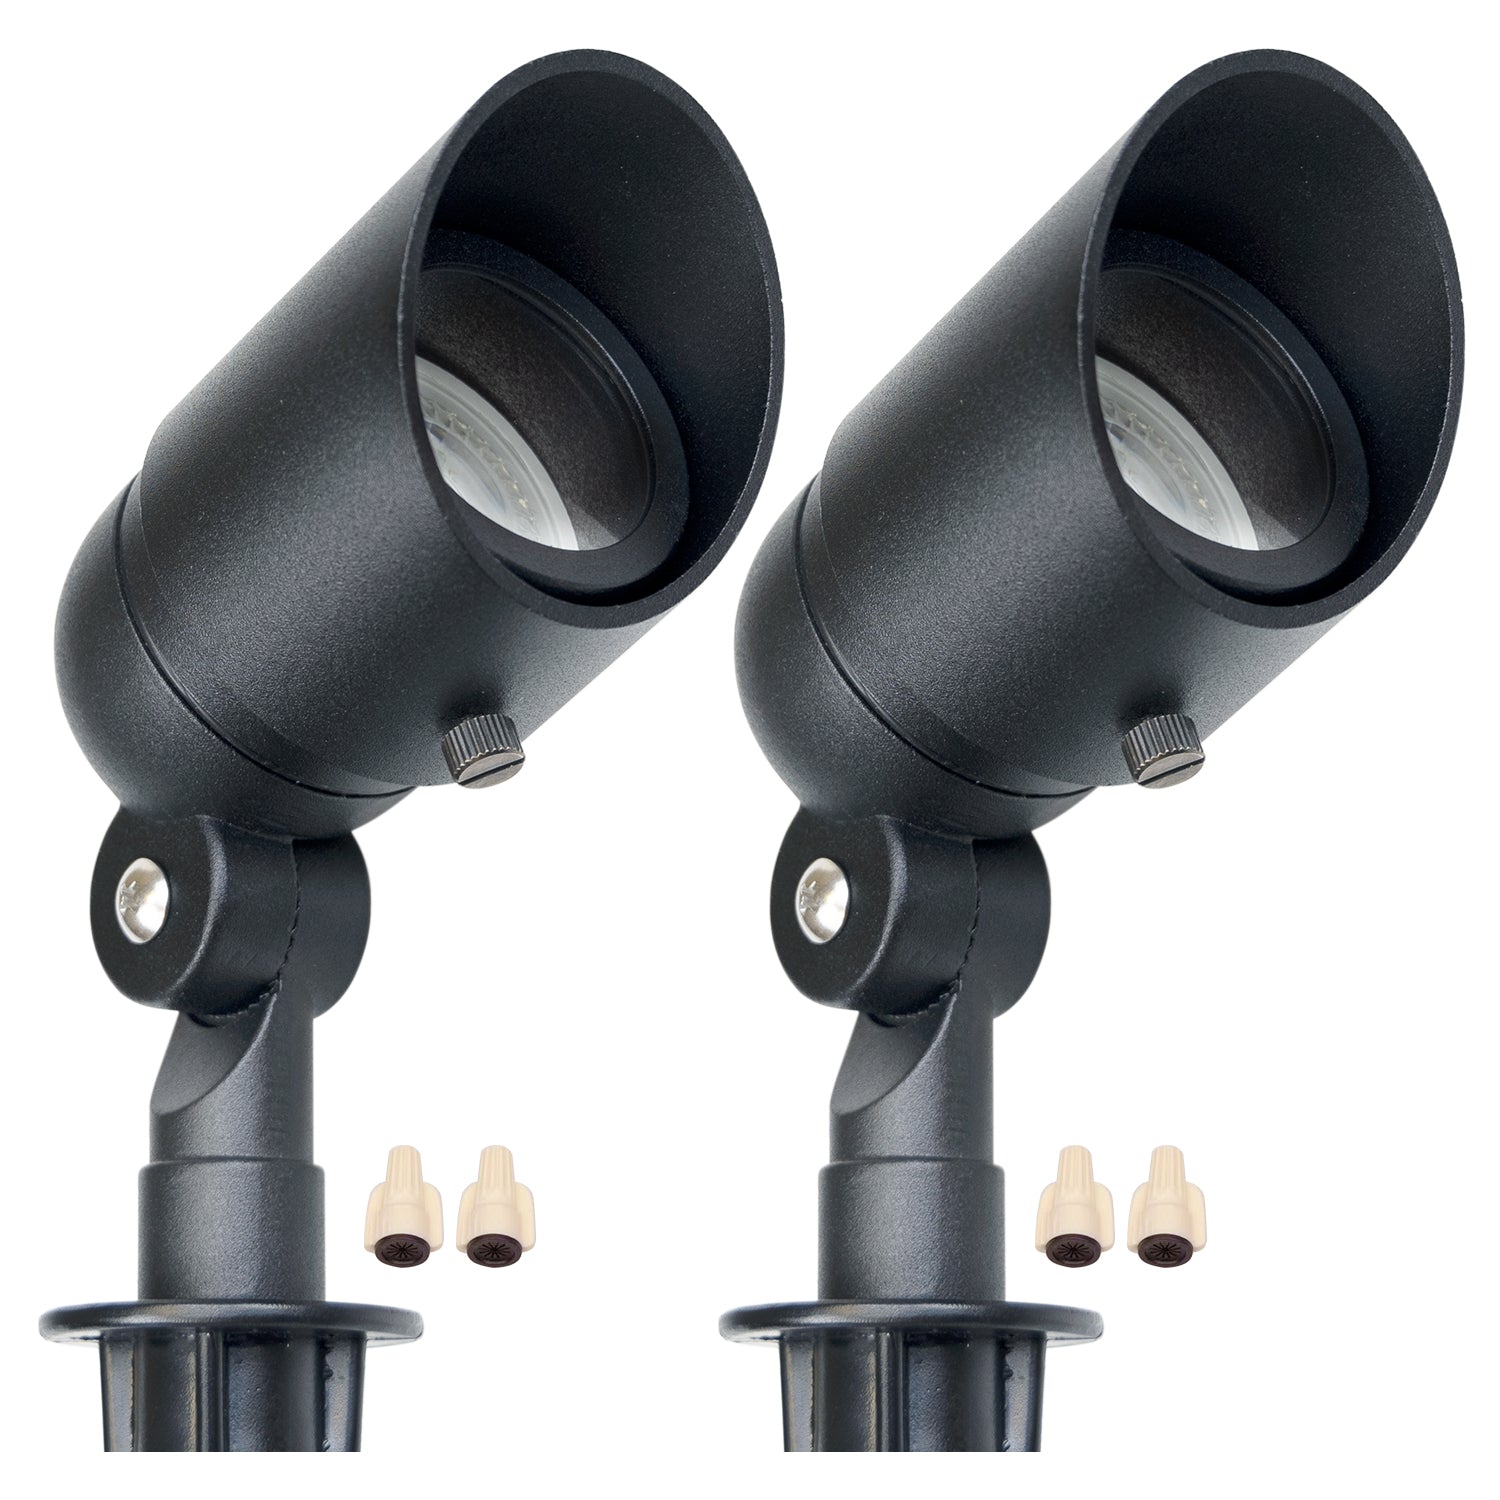 Lumina Lighting® 5W Low Voltage LED Spotlight | 12V Replaceable LED Bulb Included (Black, 2-Pack)